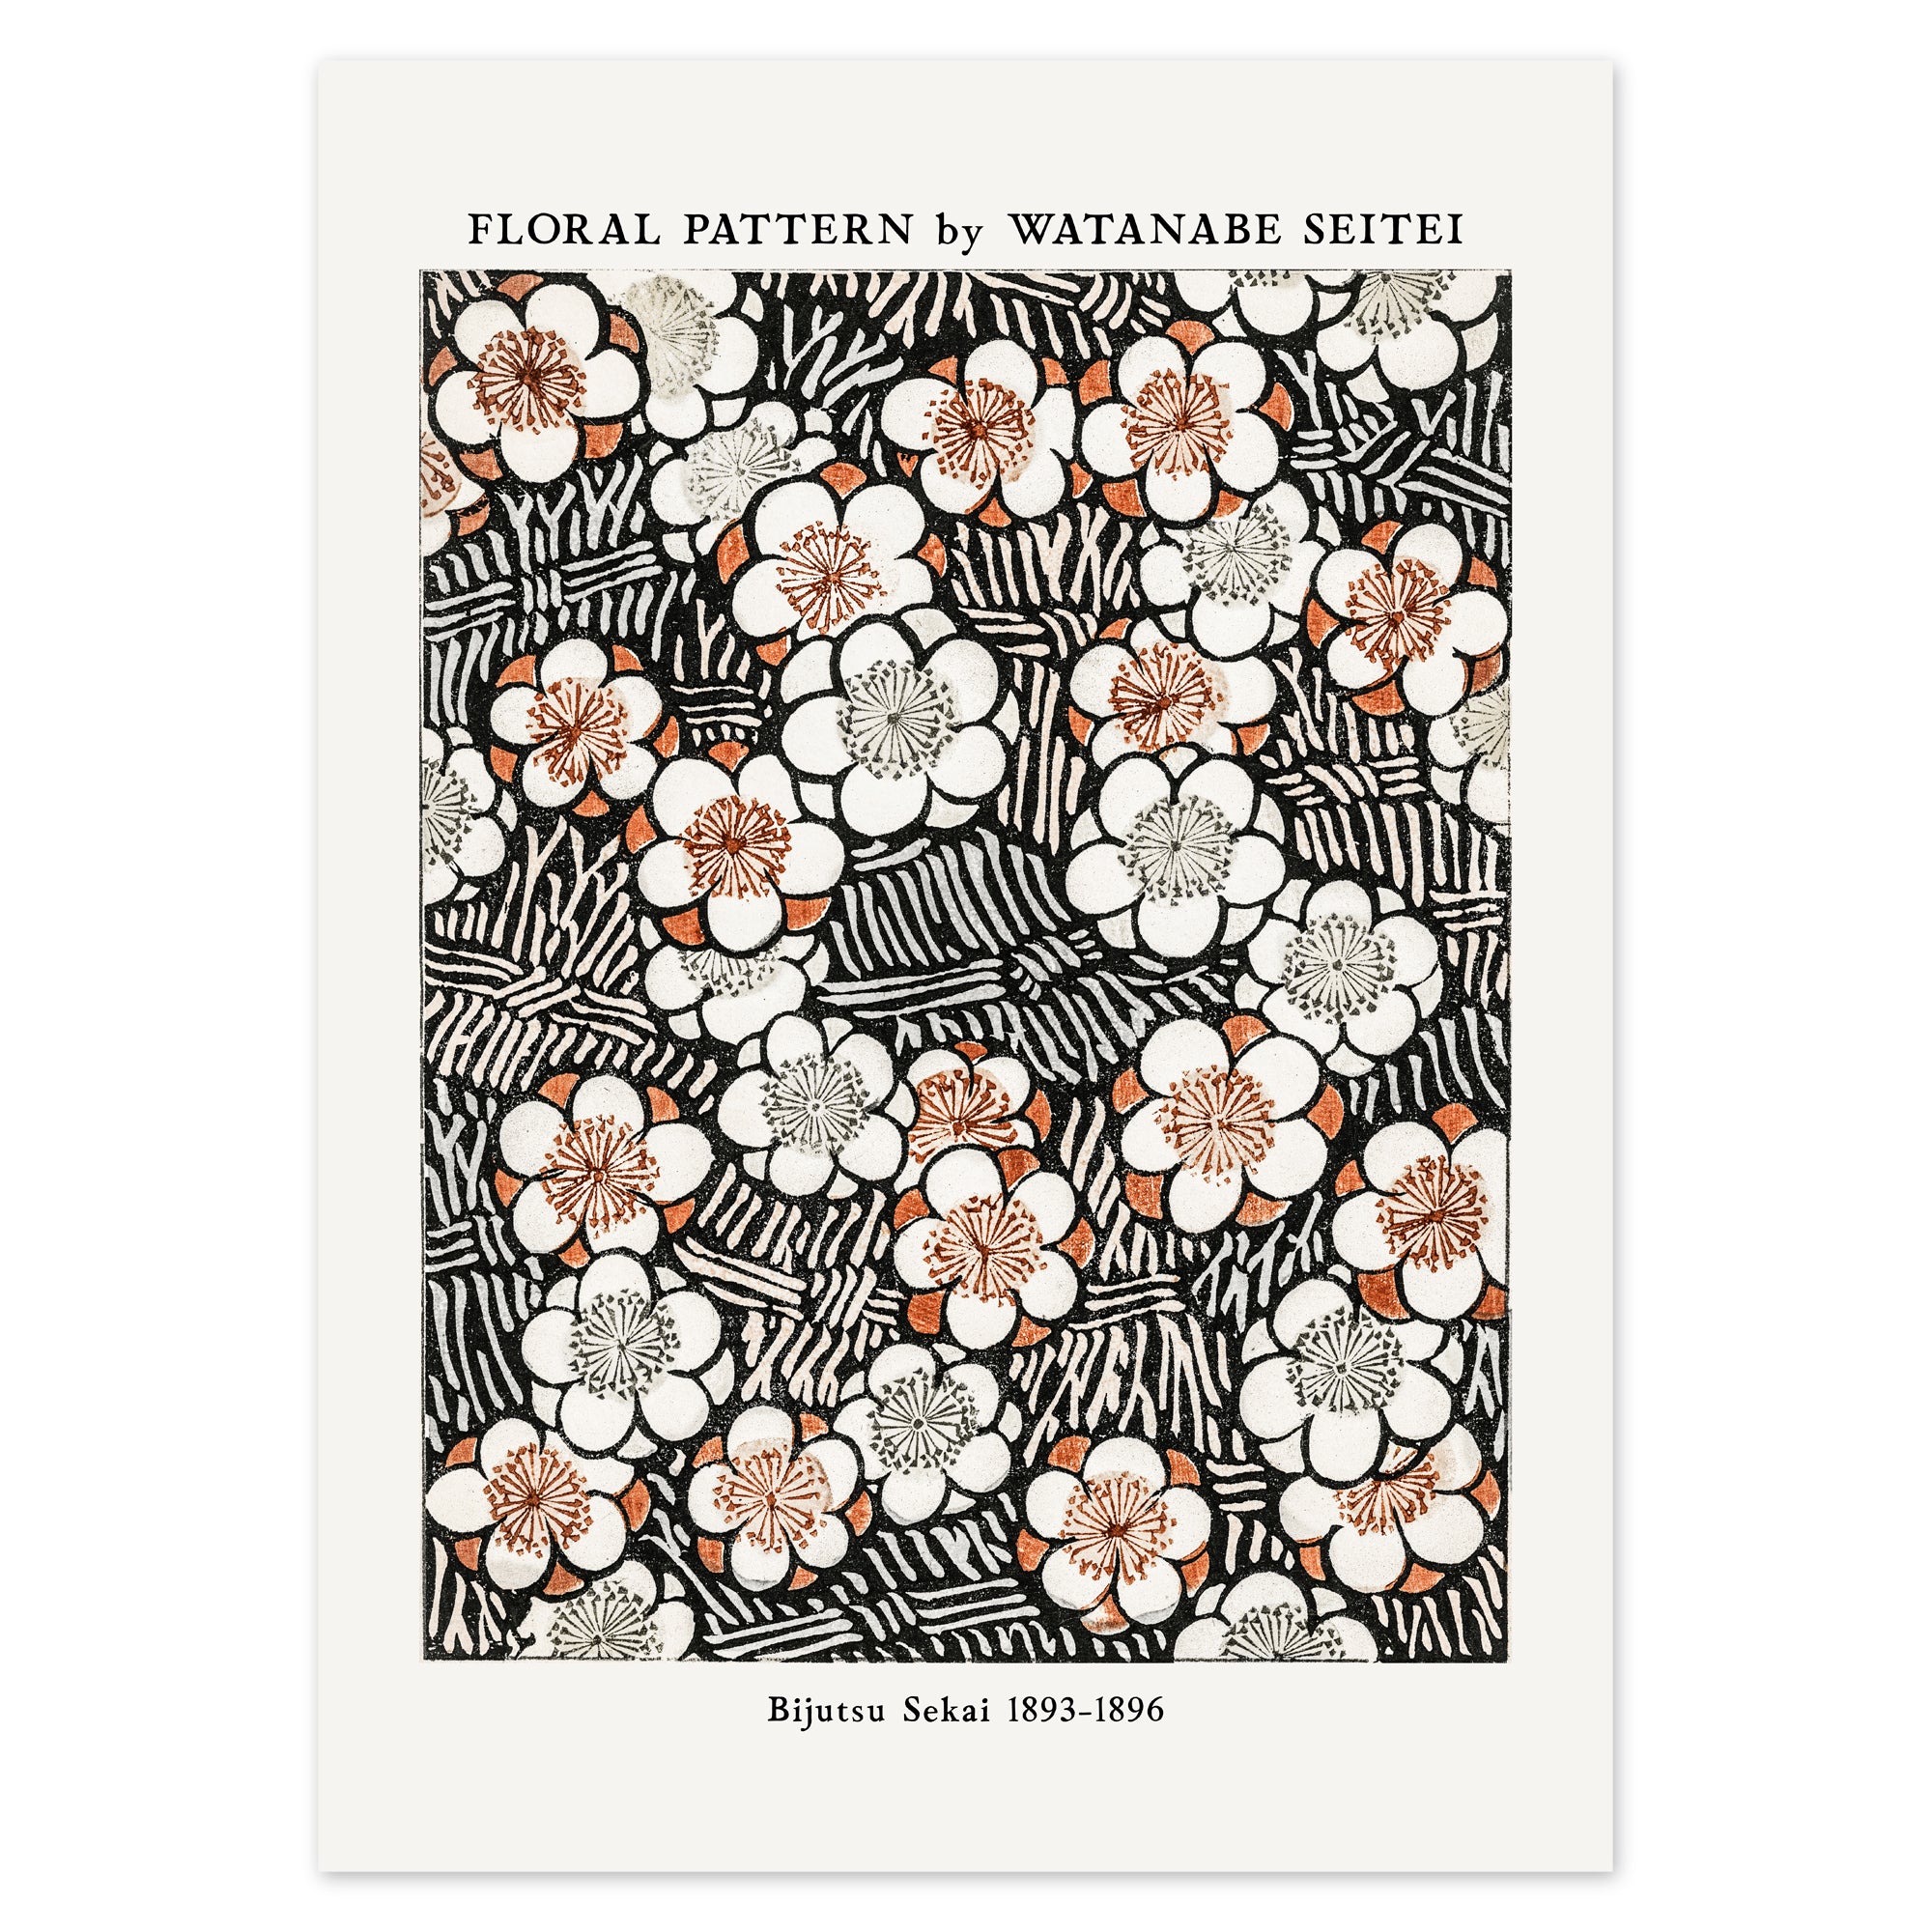 Watanabe Seitei Poster - Floral Pattern no. 1